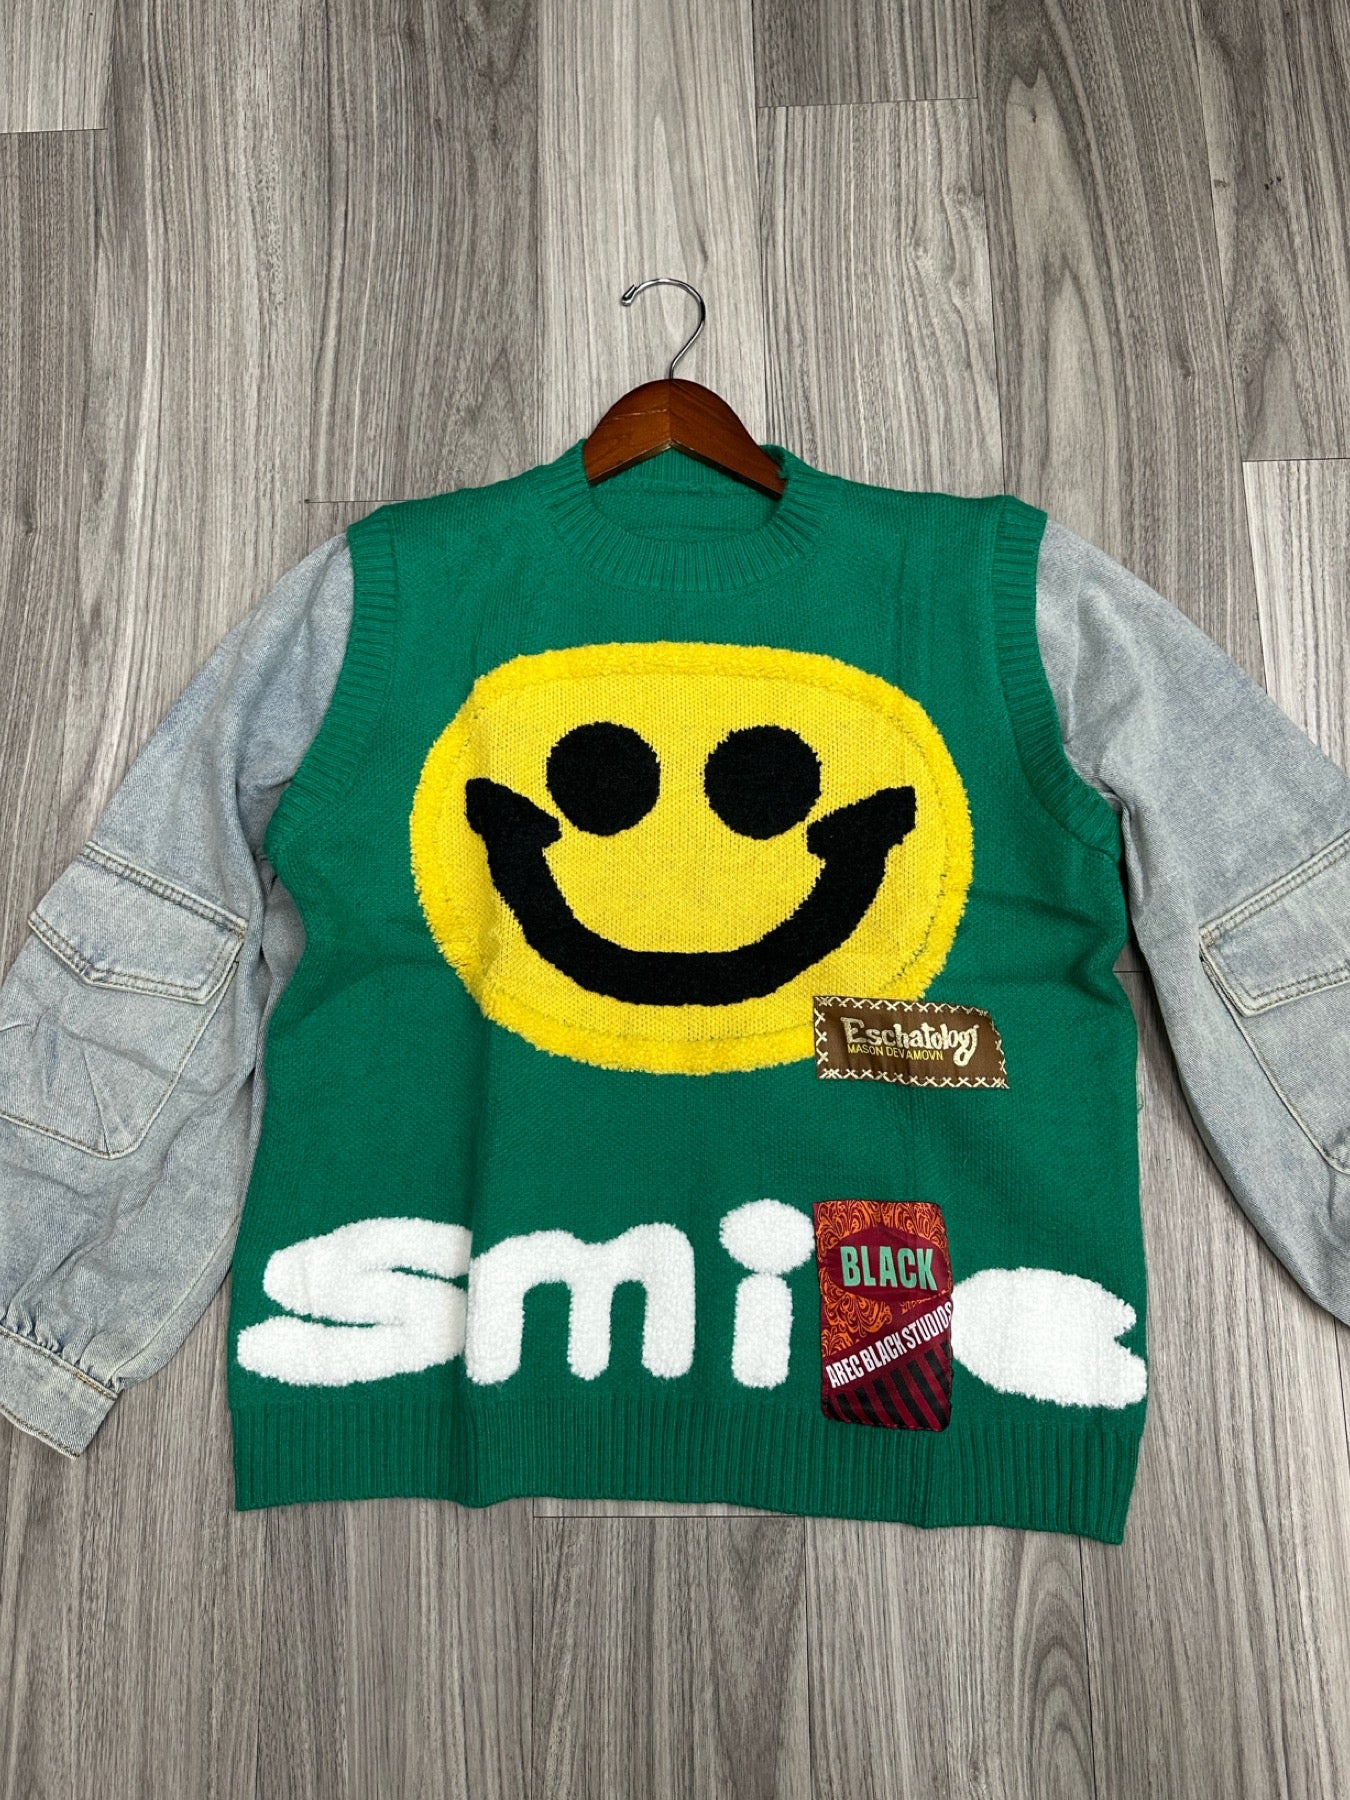 Smile Sweater/Denim Top (Green)